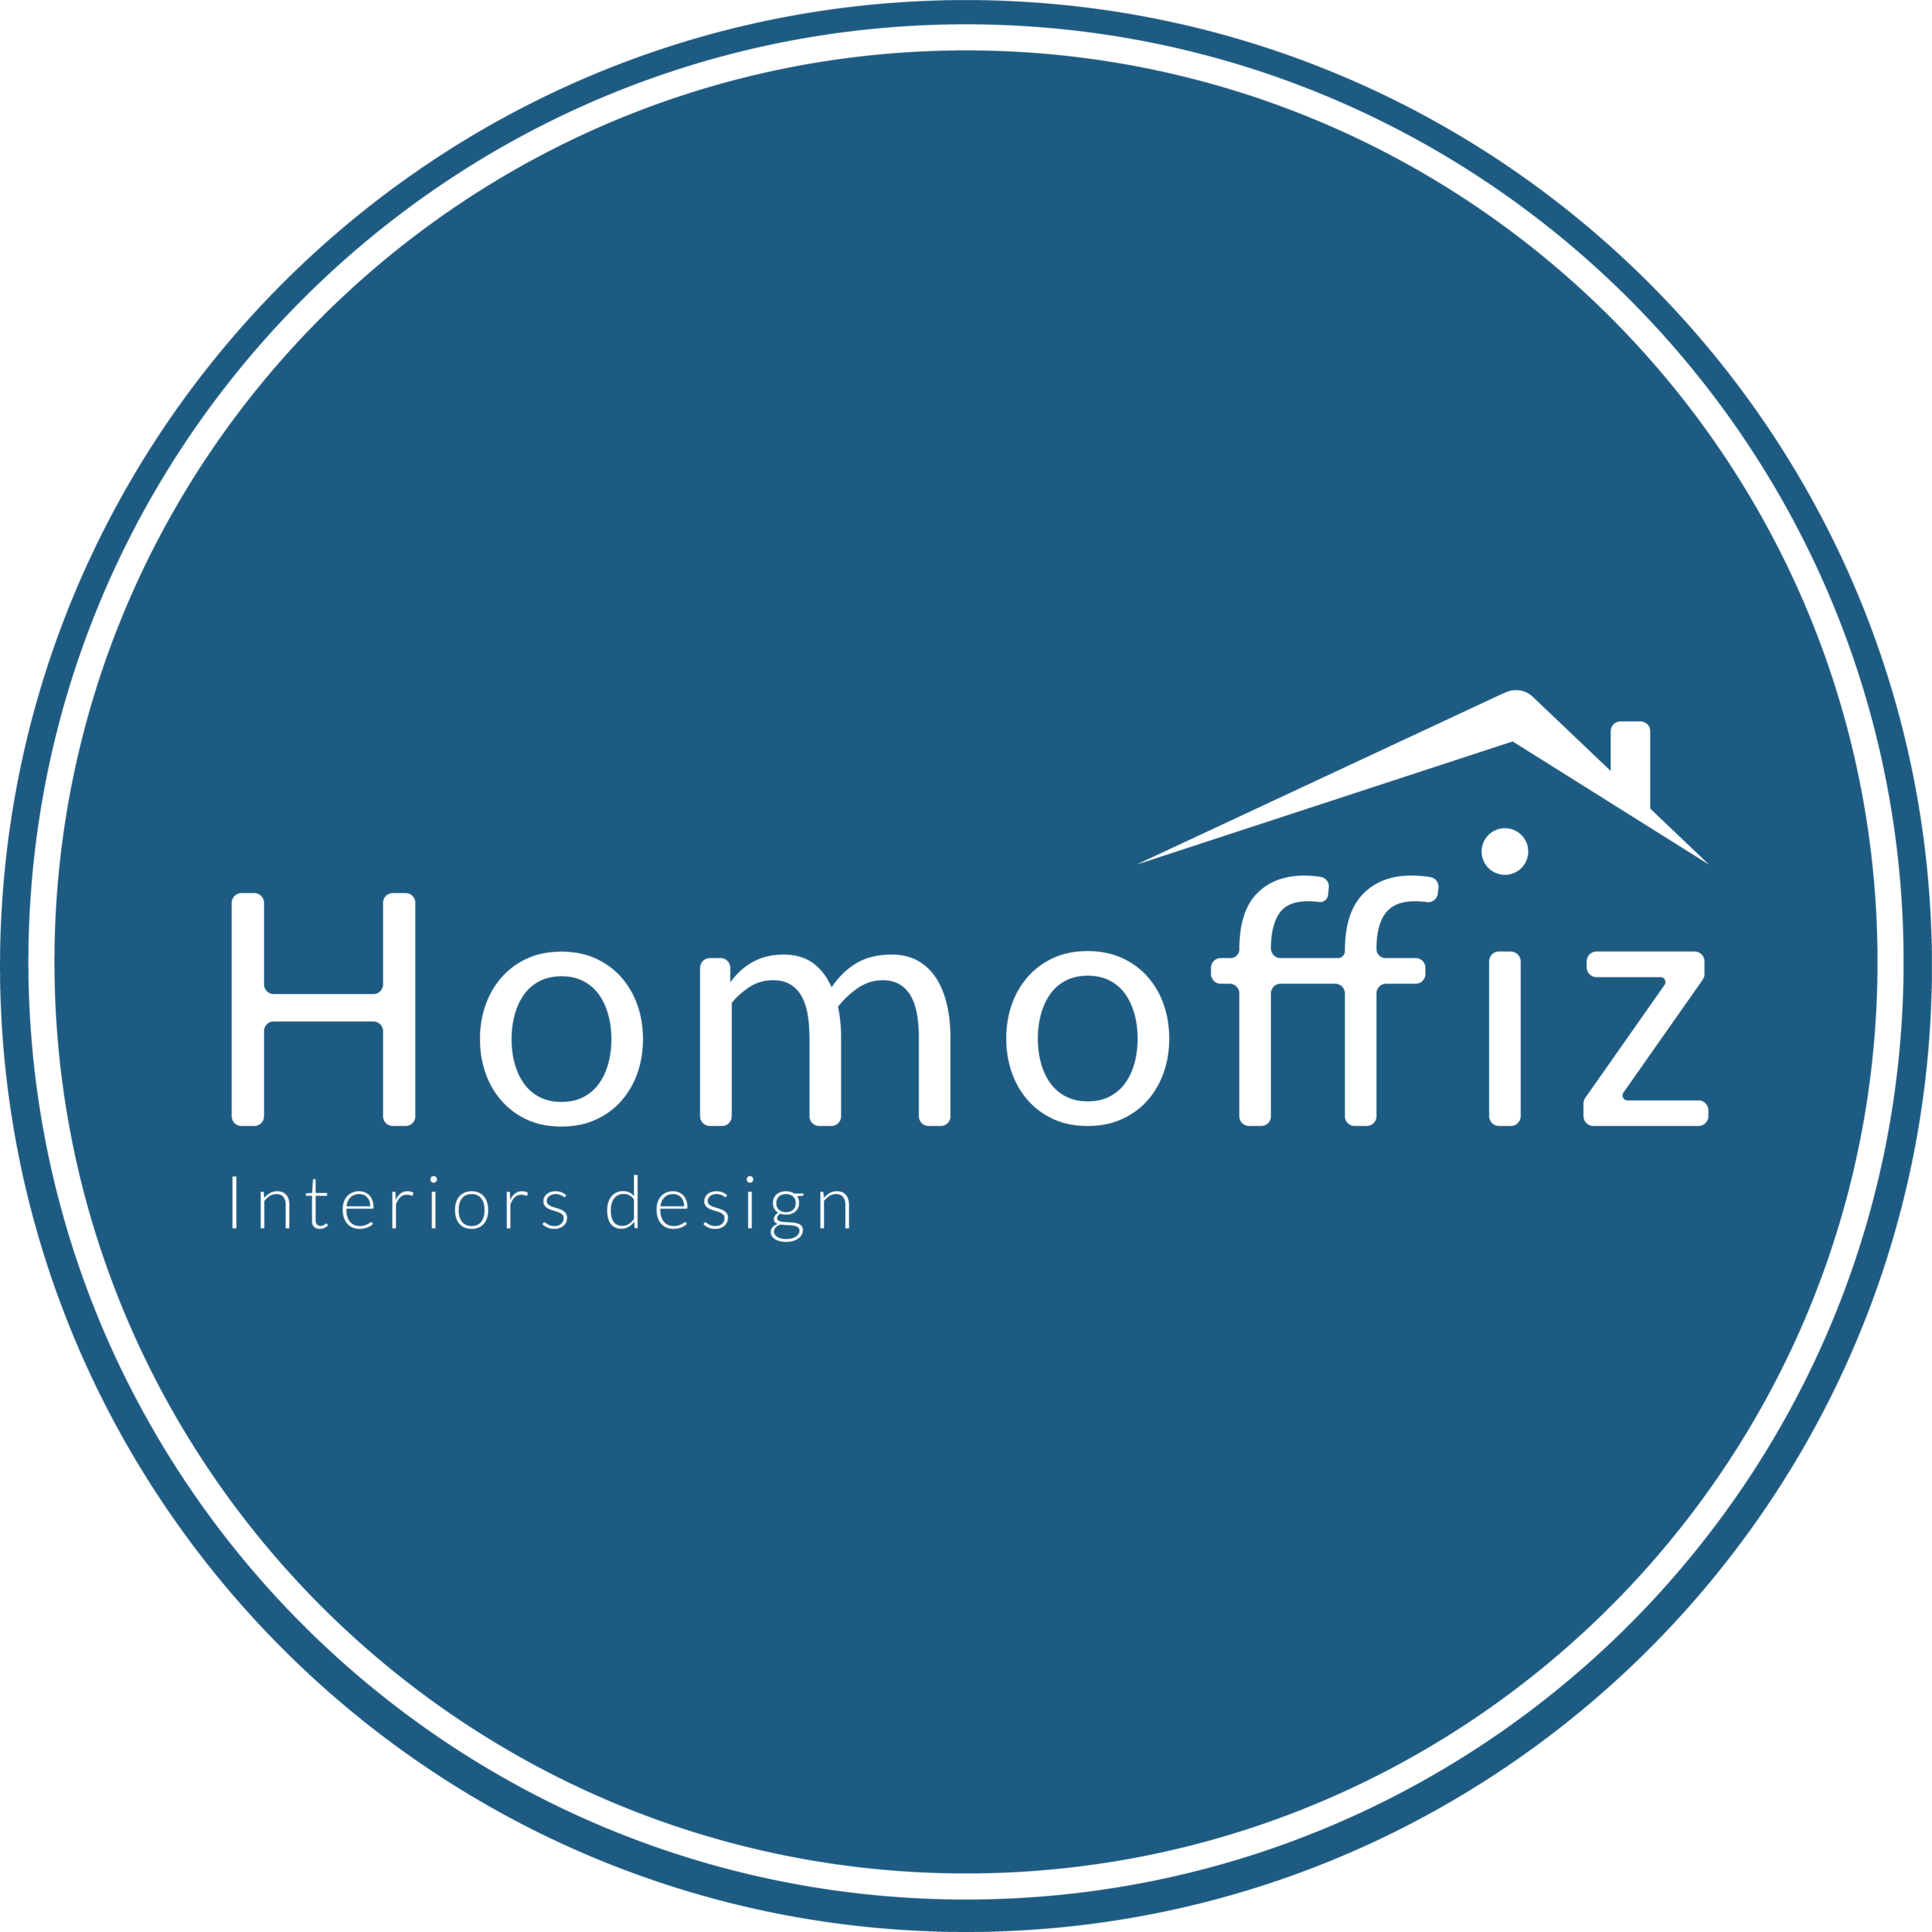 Homoffiz Interiors design